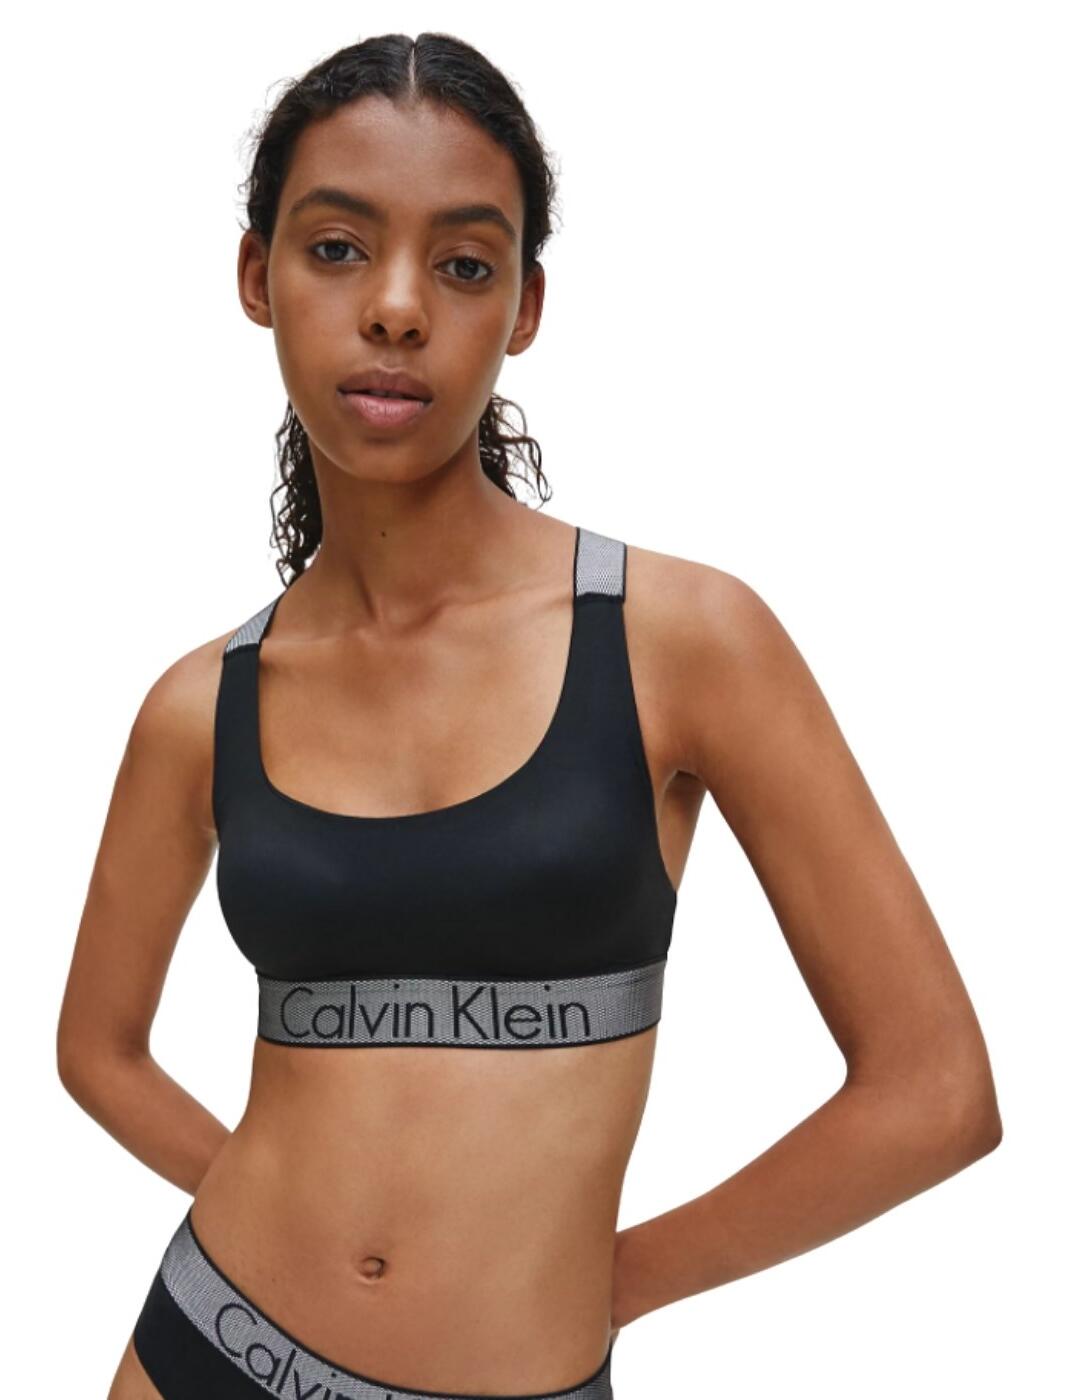 Calvin Klein Customised Stretch Bralette in Black